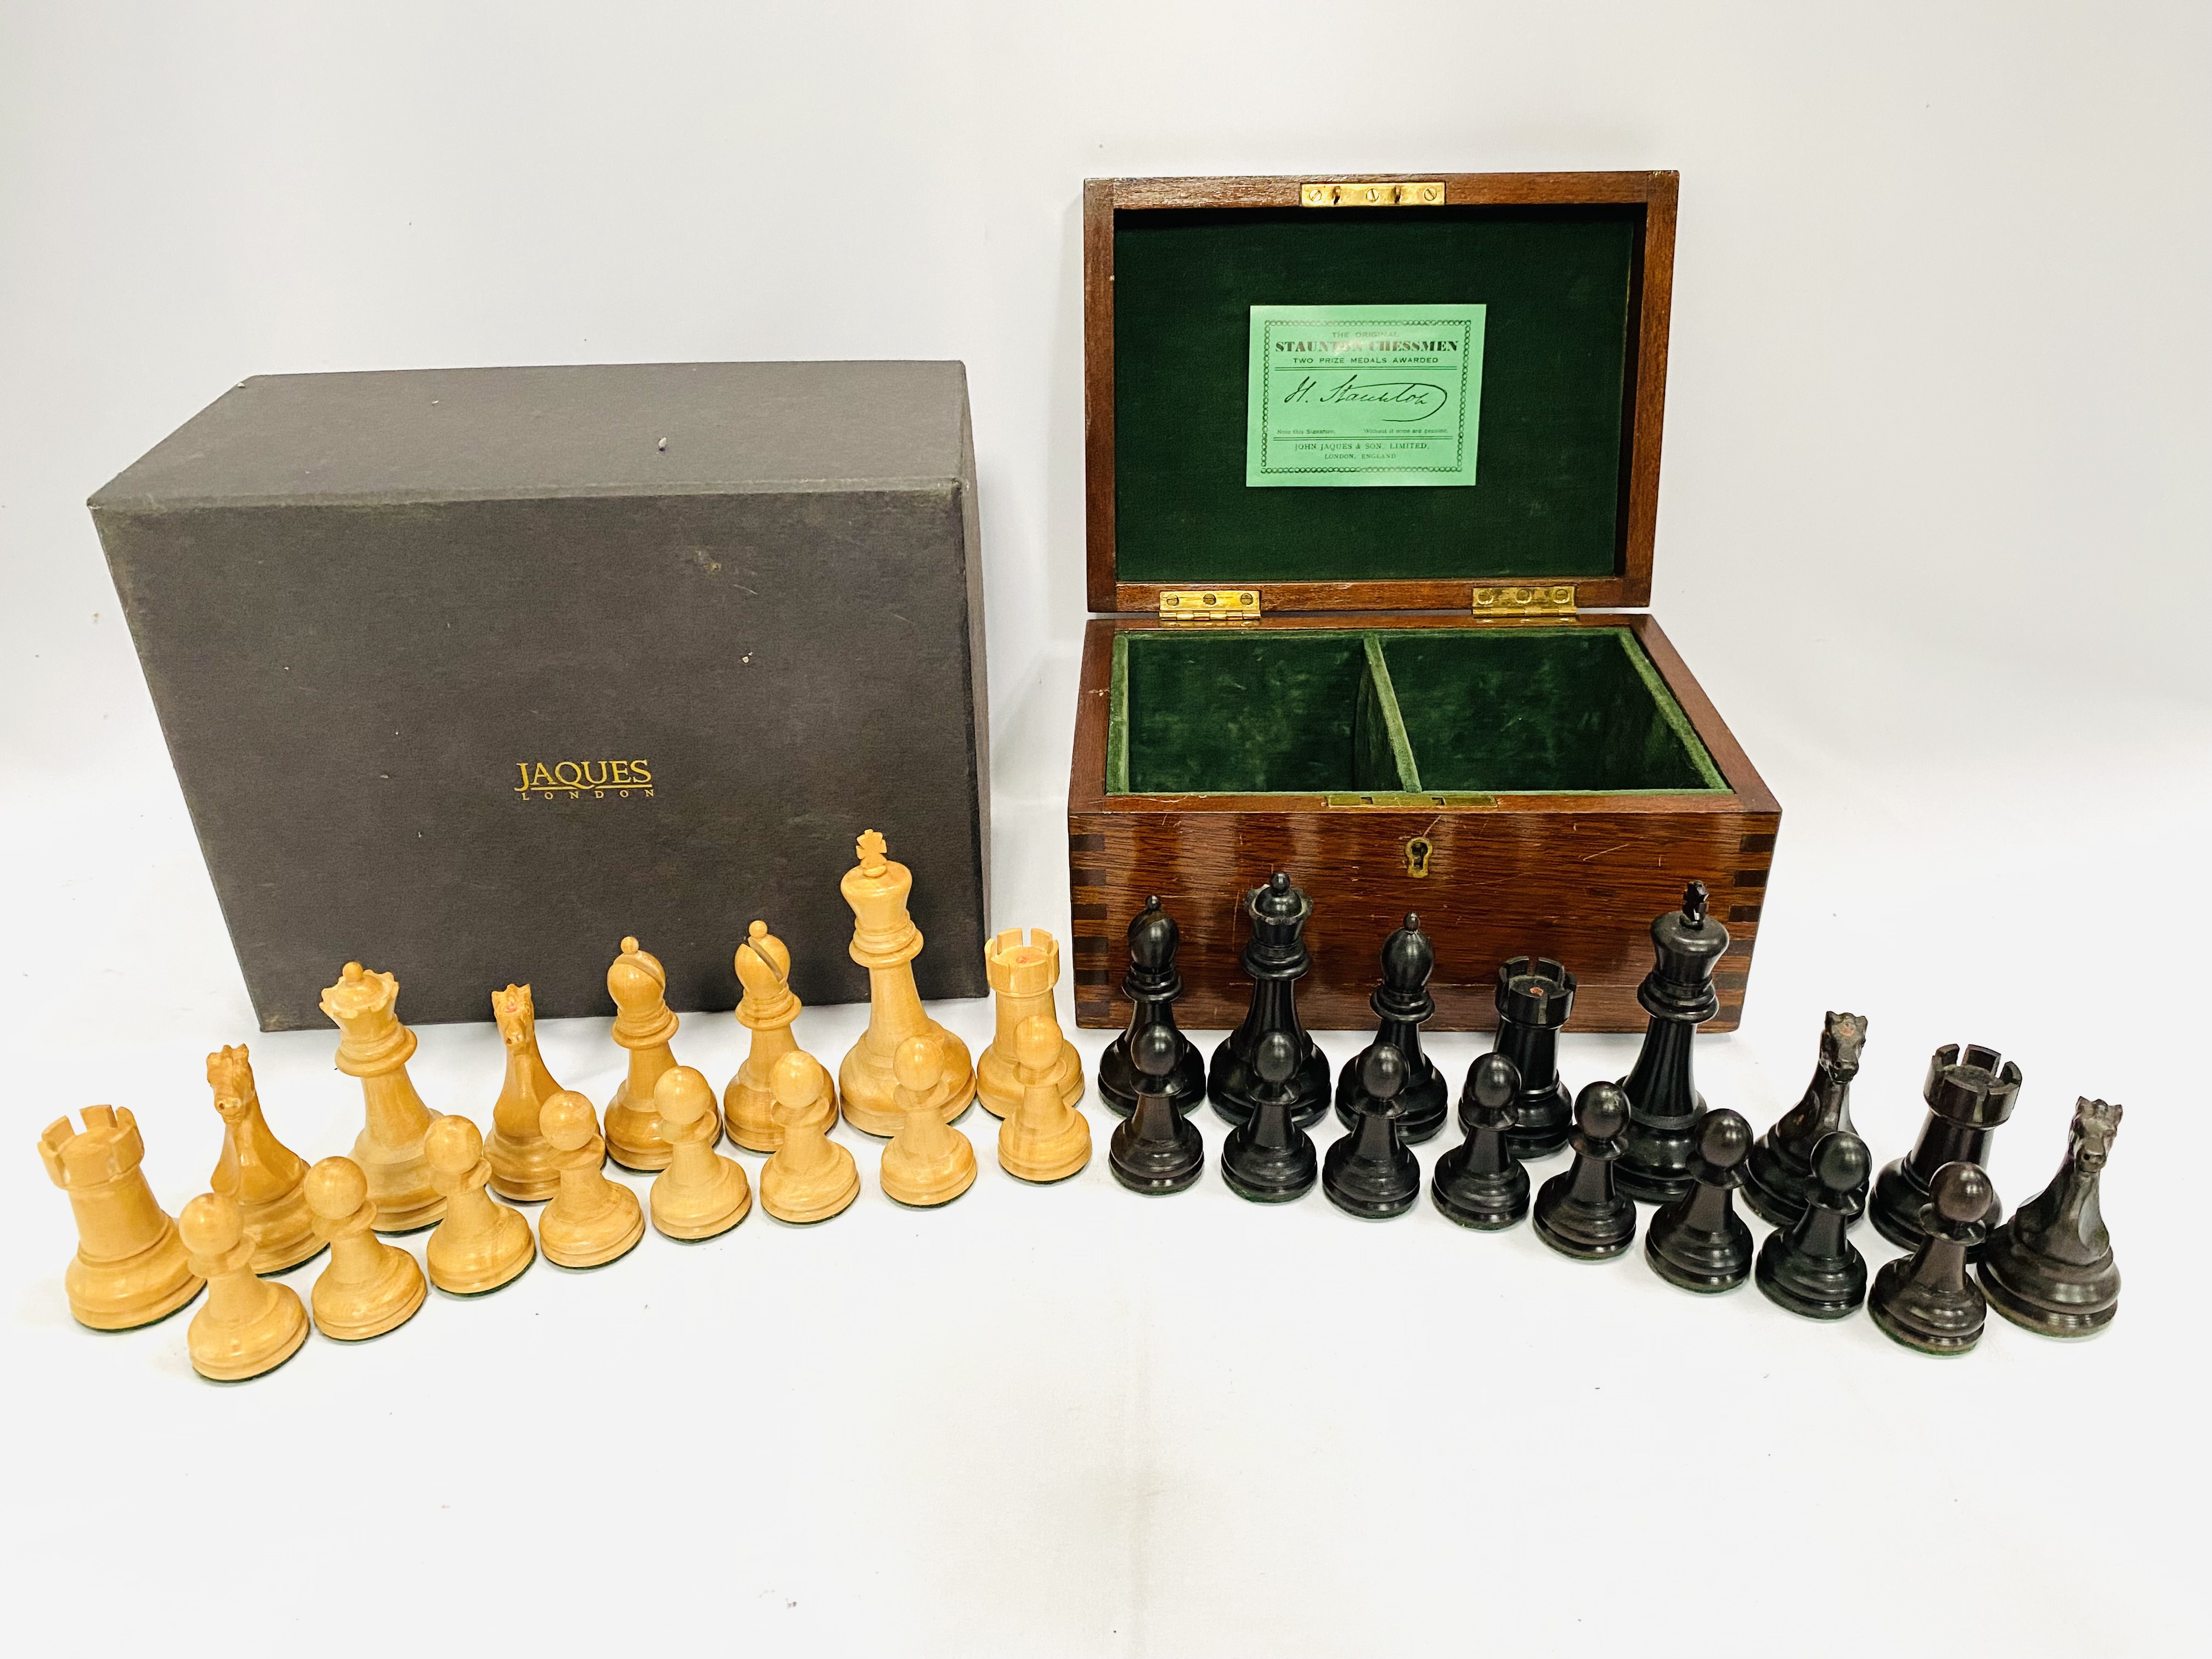 Jaques chess set